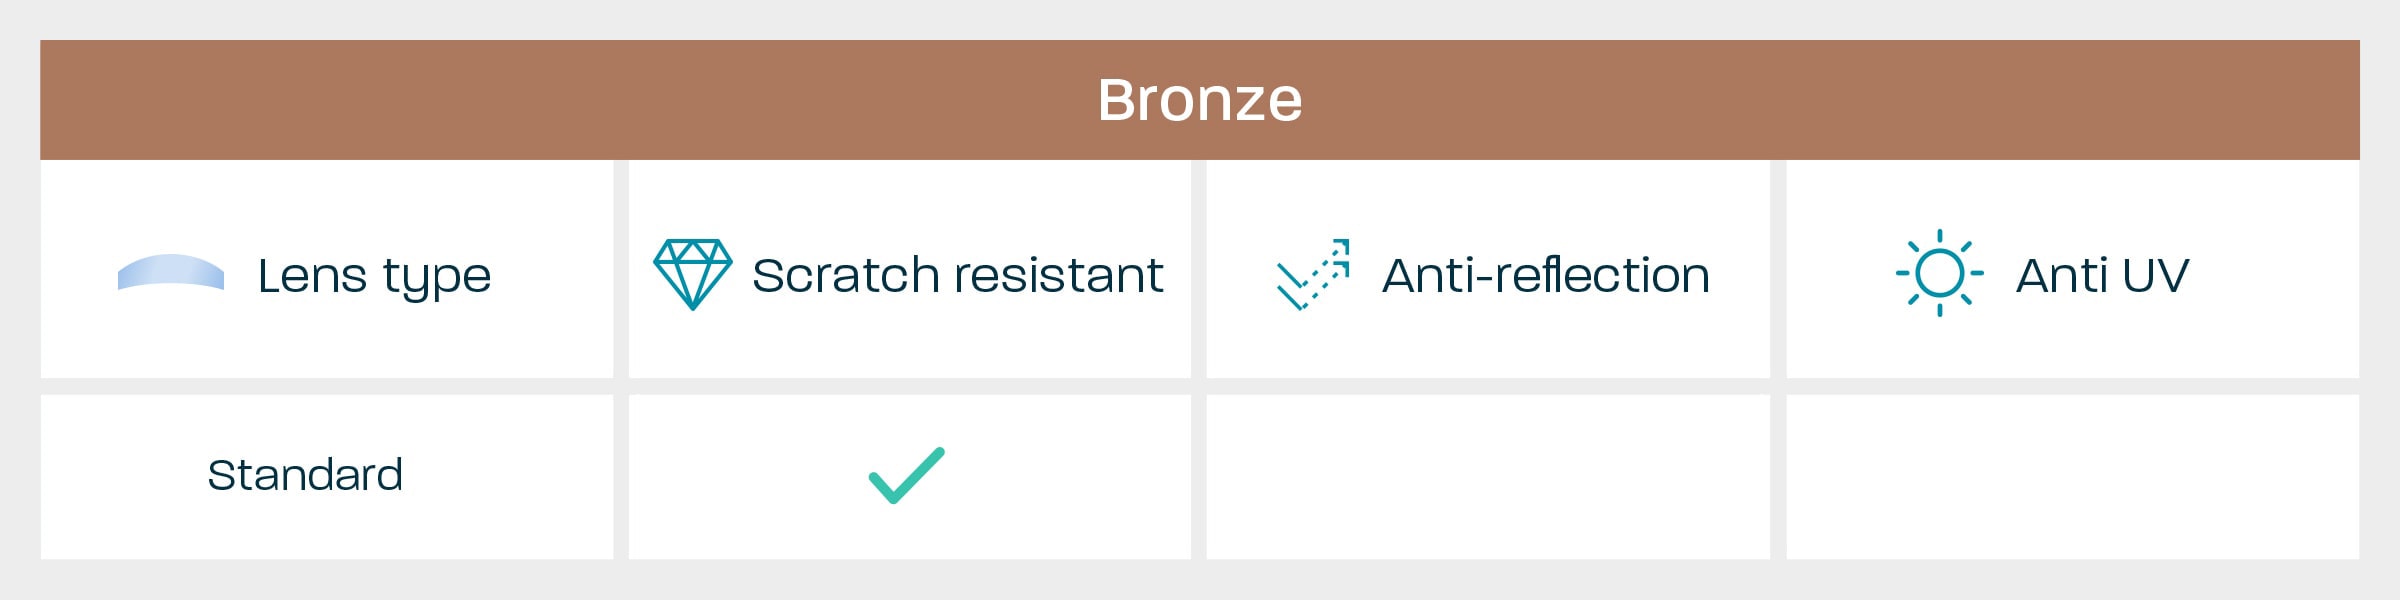 Bronze Package features: standard lenses, scratch resistant